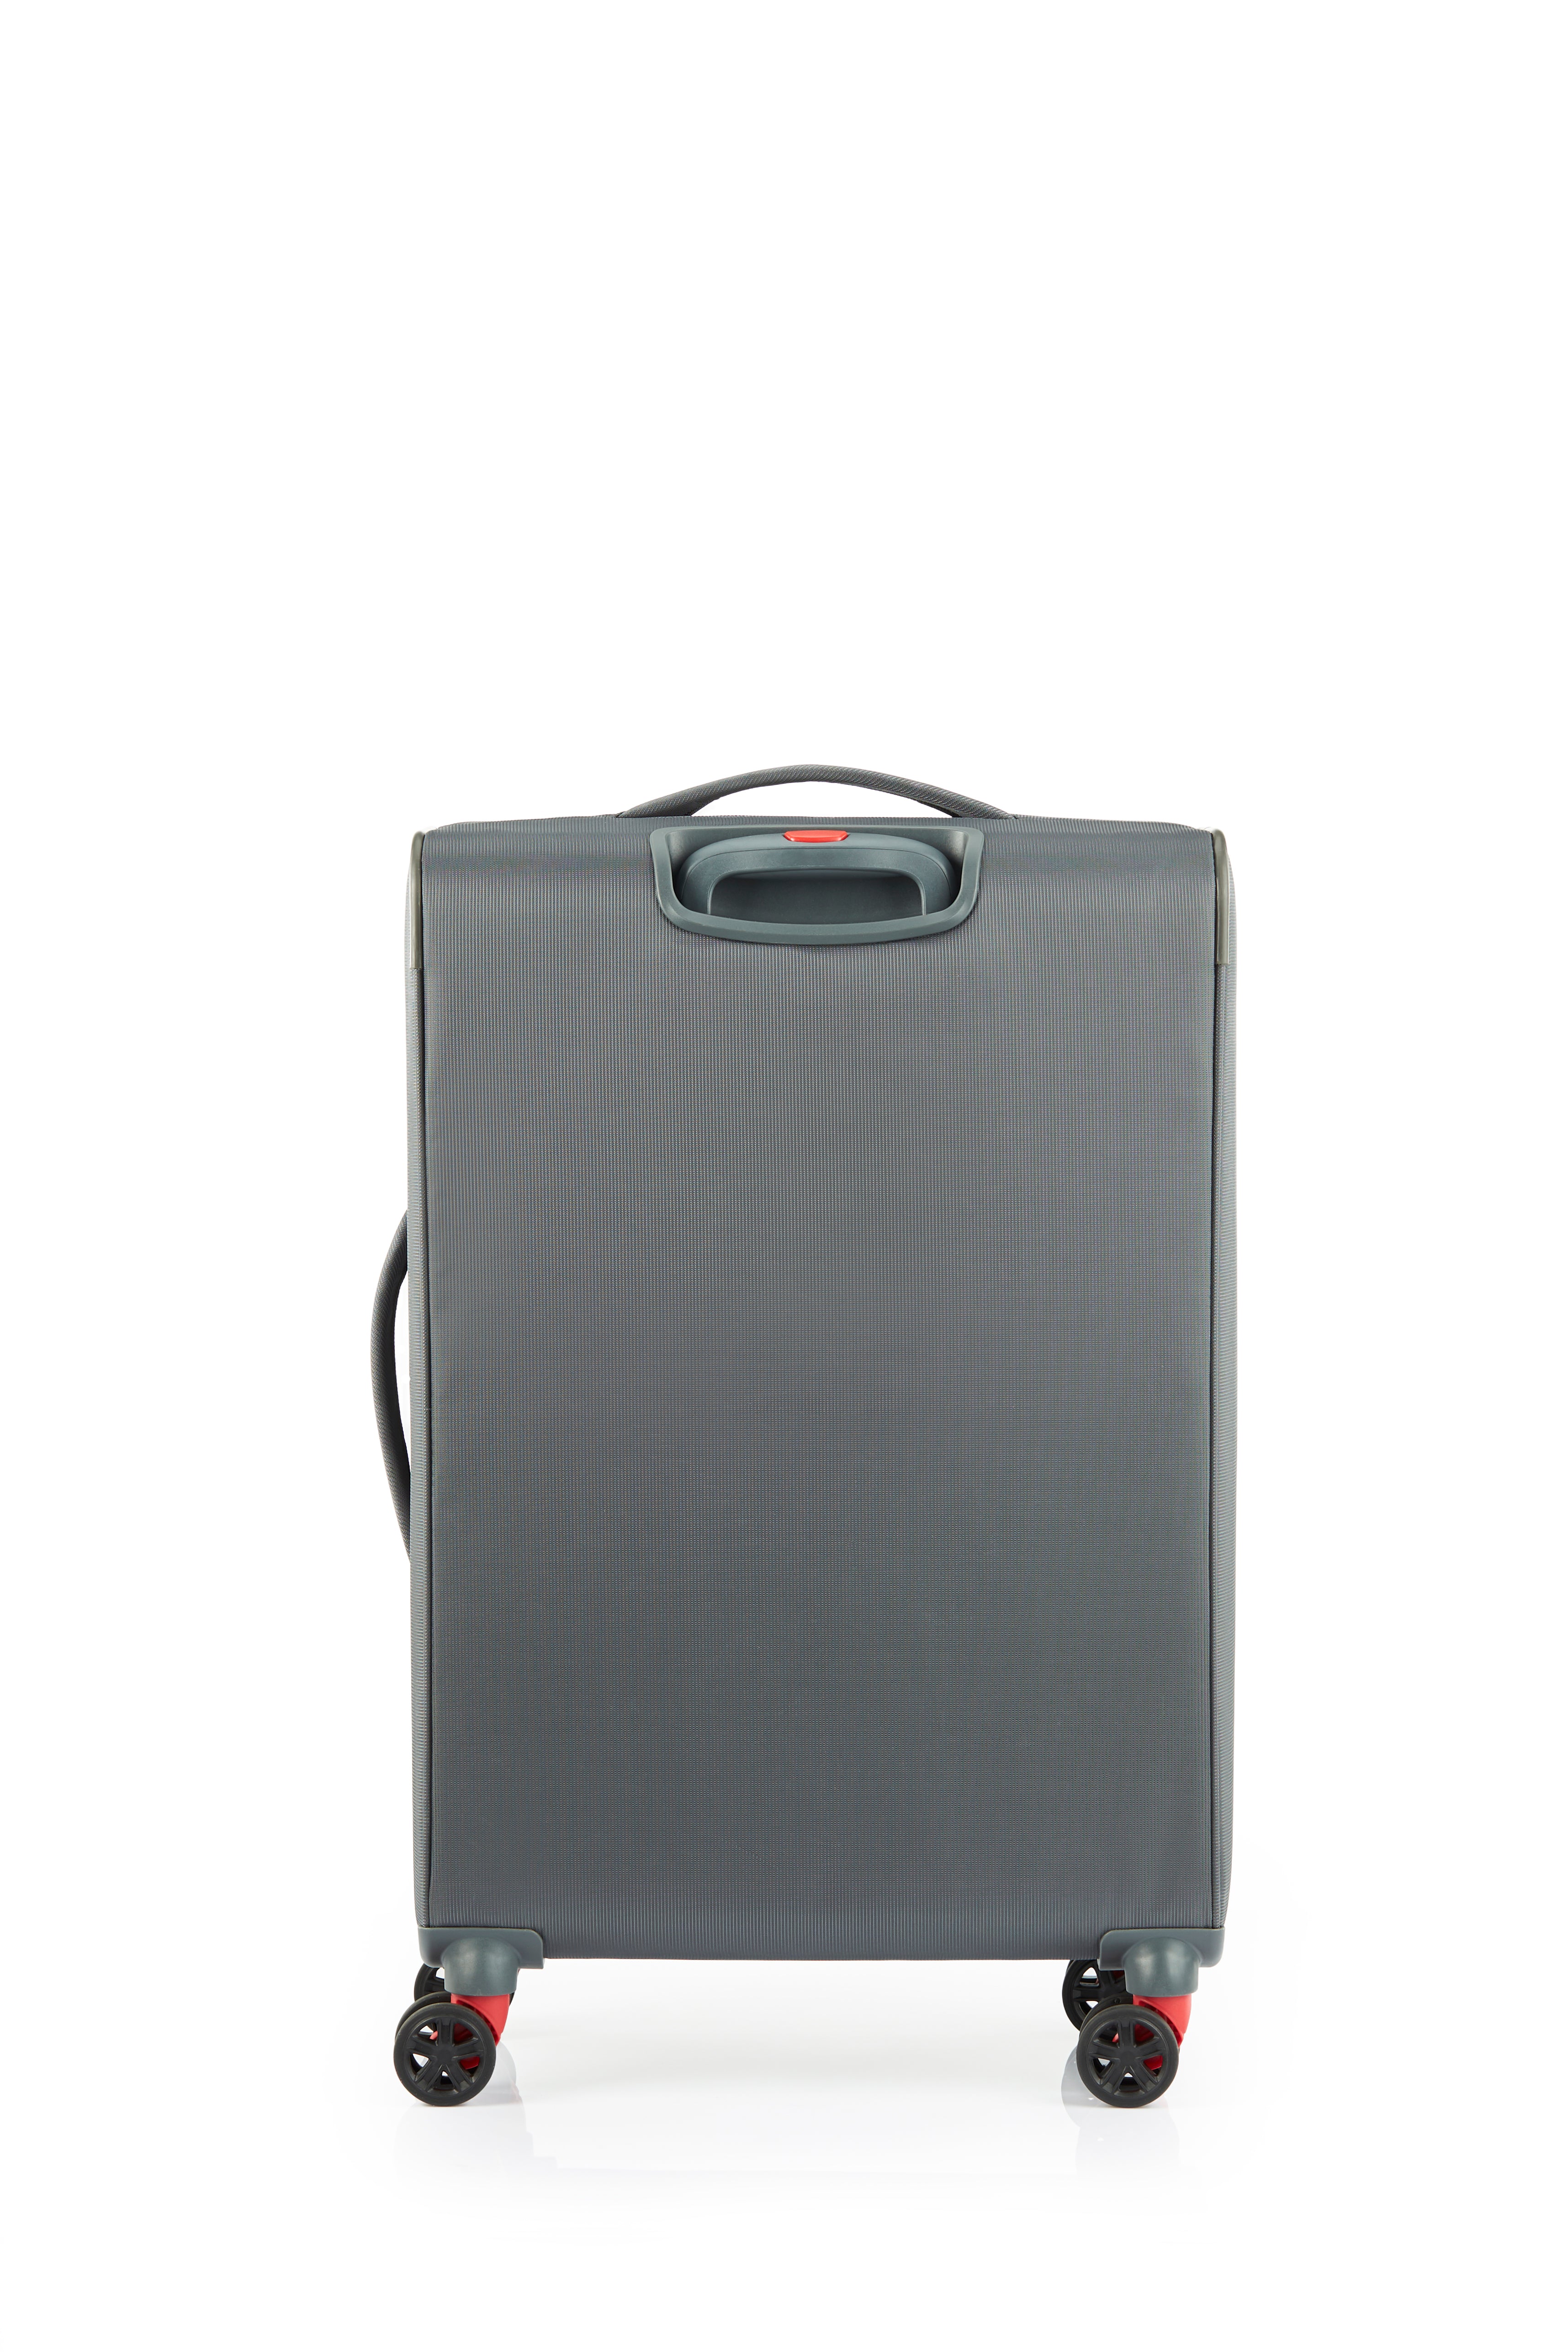 American Tourister - Applite ECO 71cm Medium Suitcase - Grey/Red-5